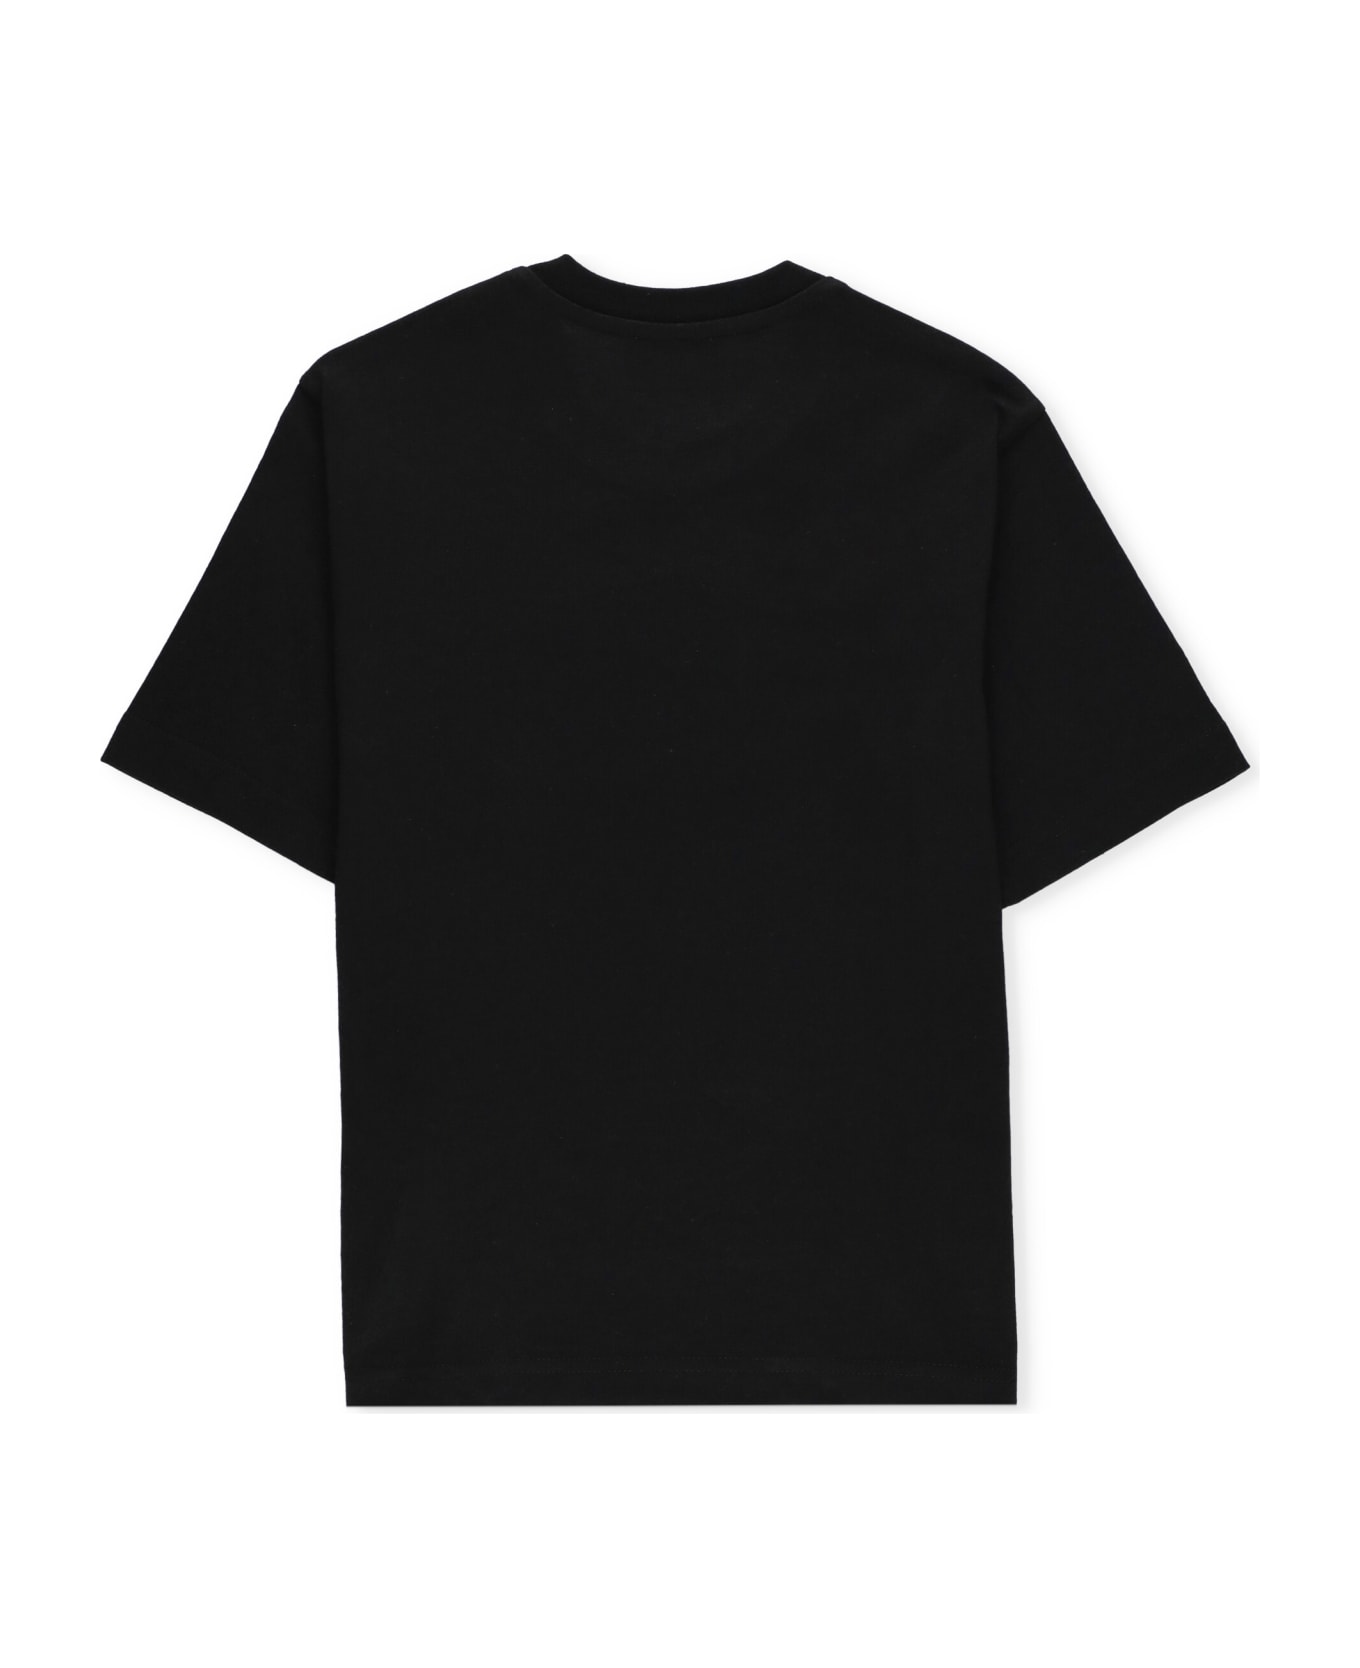 Diesel Just Bigoval T-shirt - Black